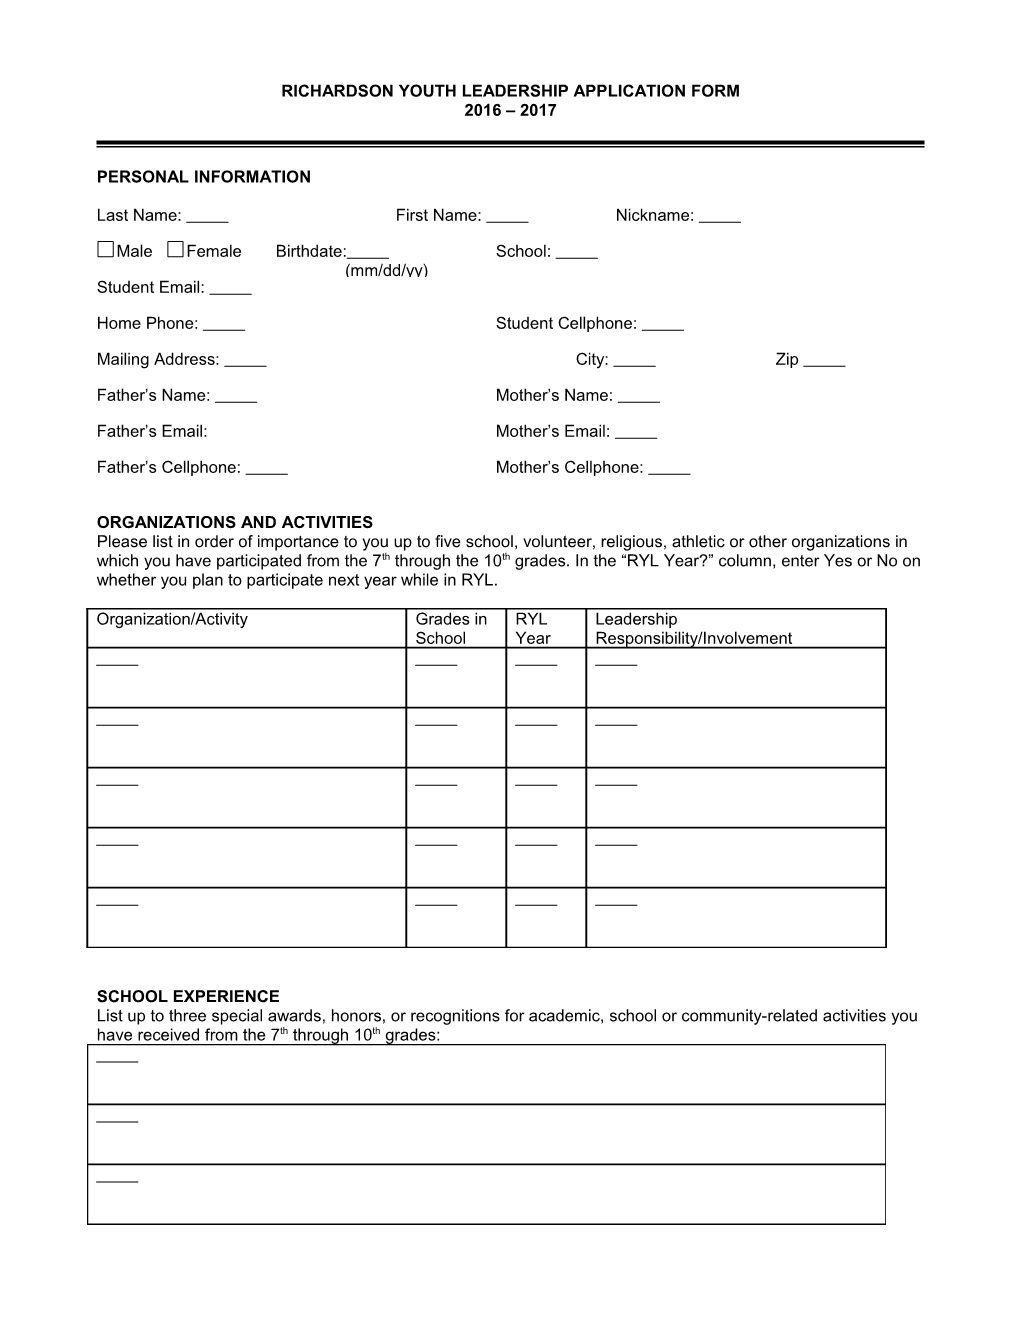 Richardson Youth Leadership Application Form